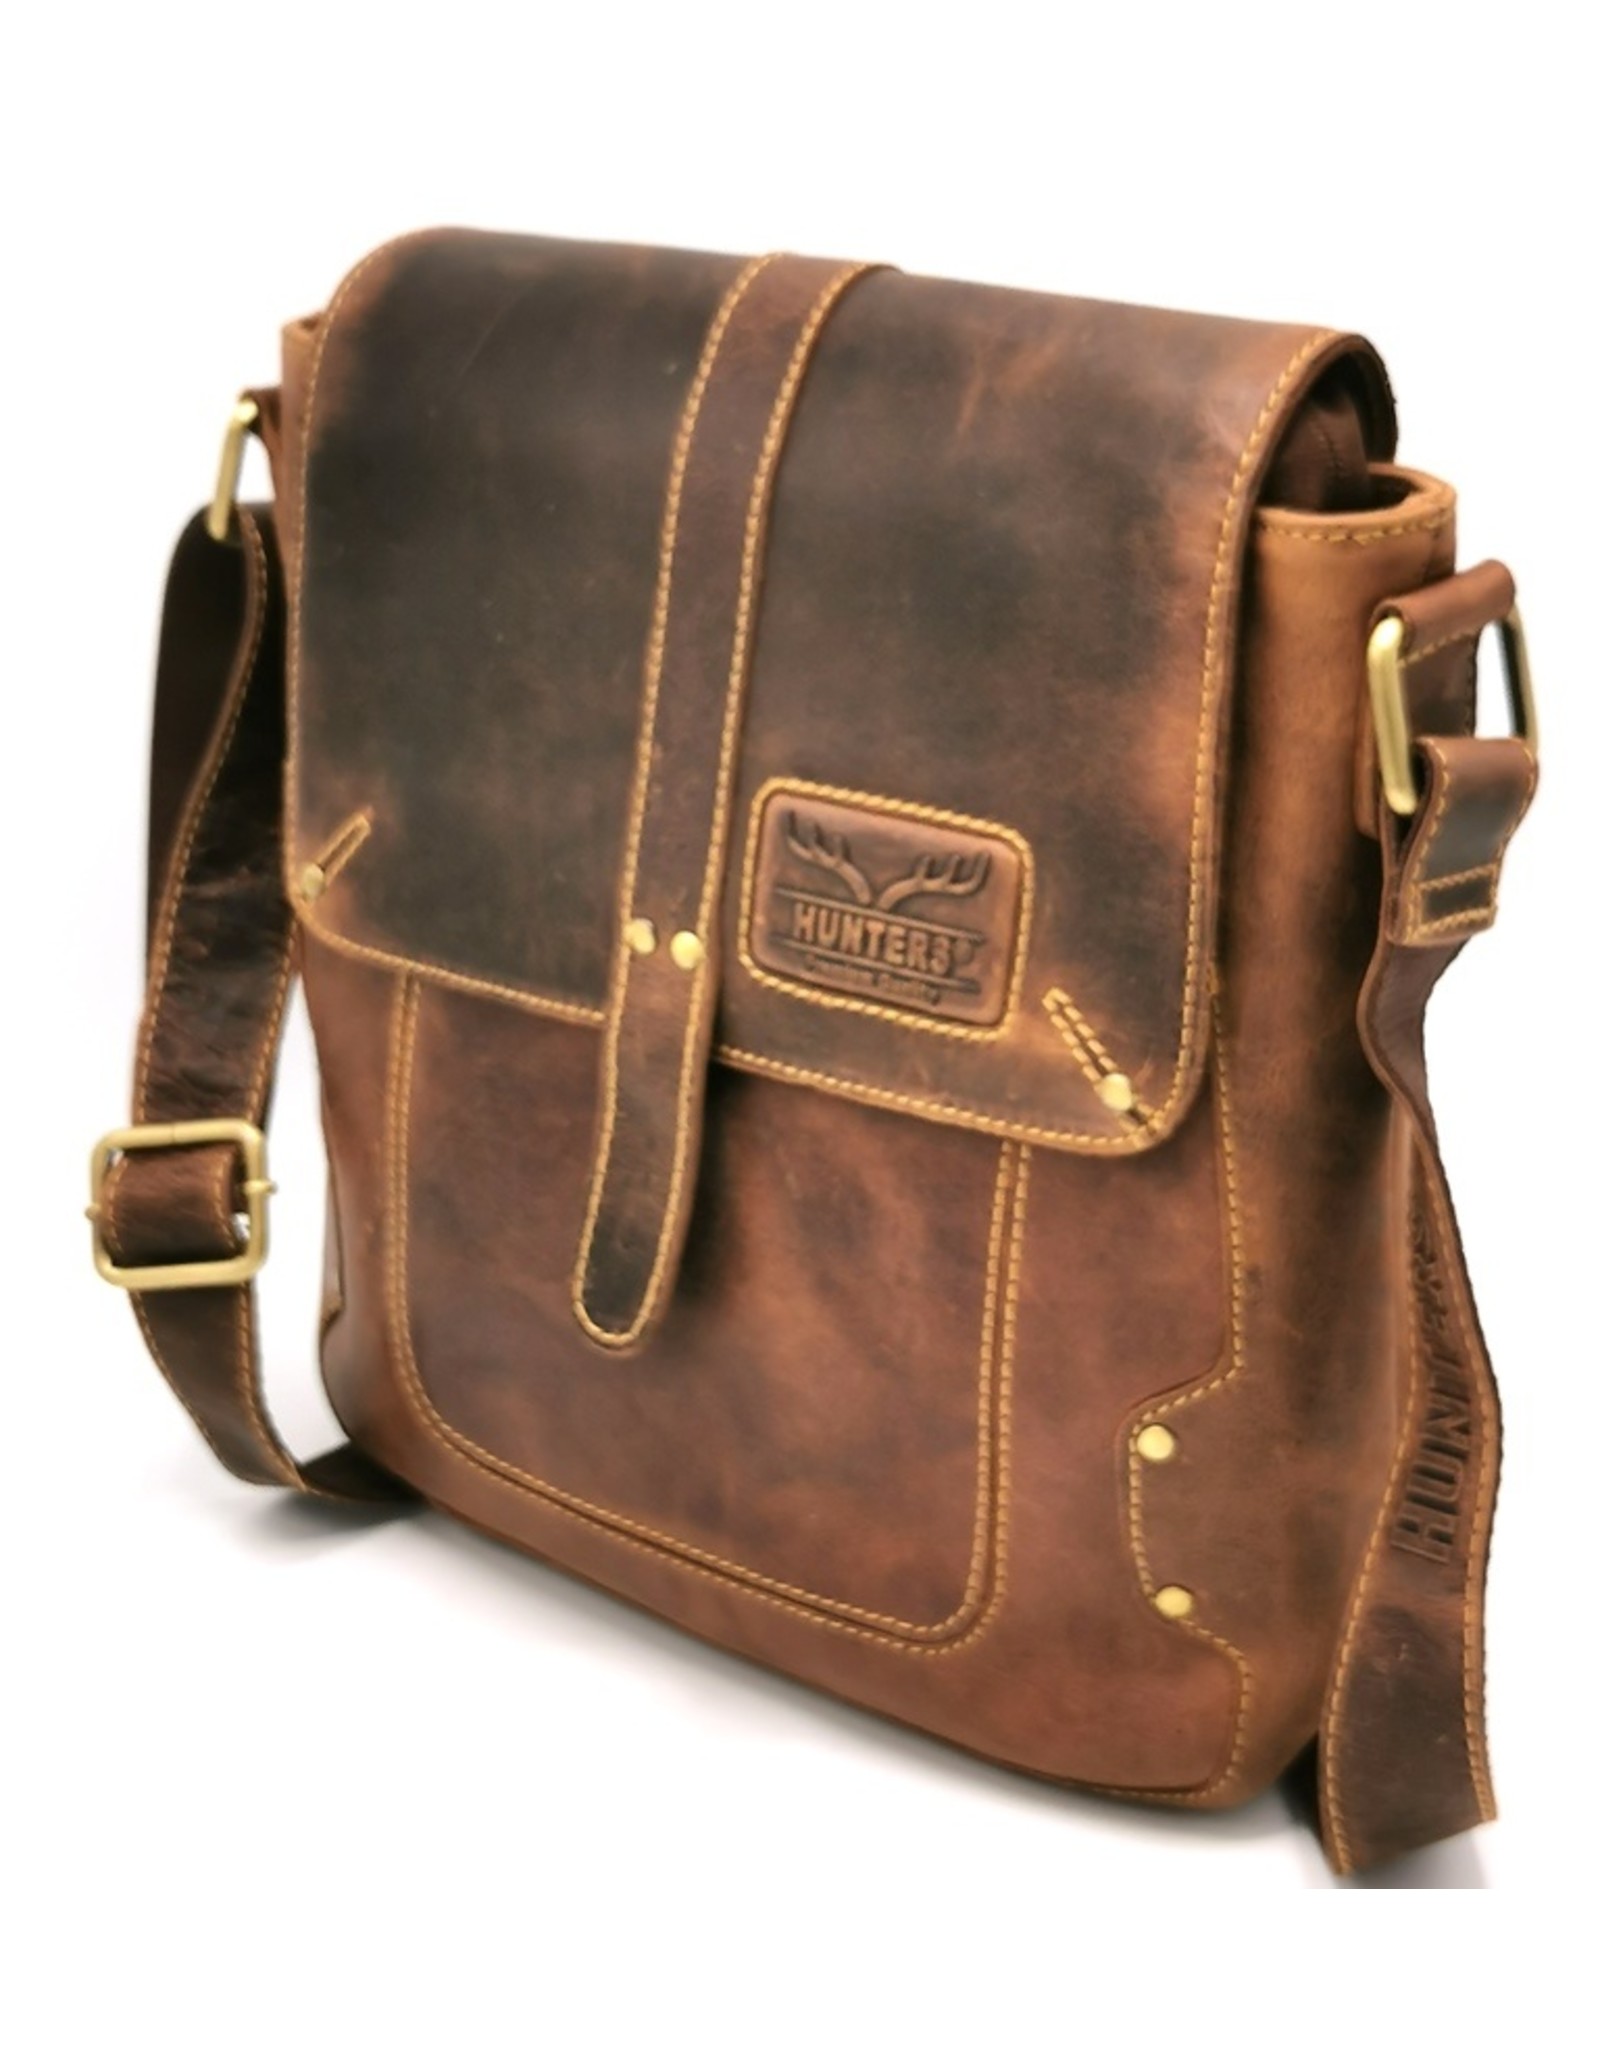 Hunters Leather shoulder bags  - Hunters Leather shoulder bag with cover Vintage look